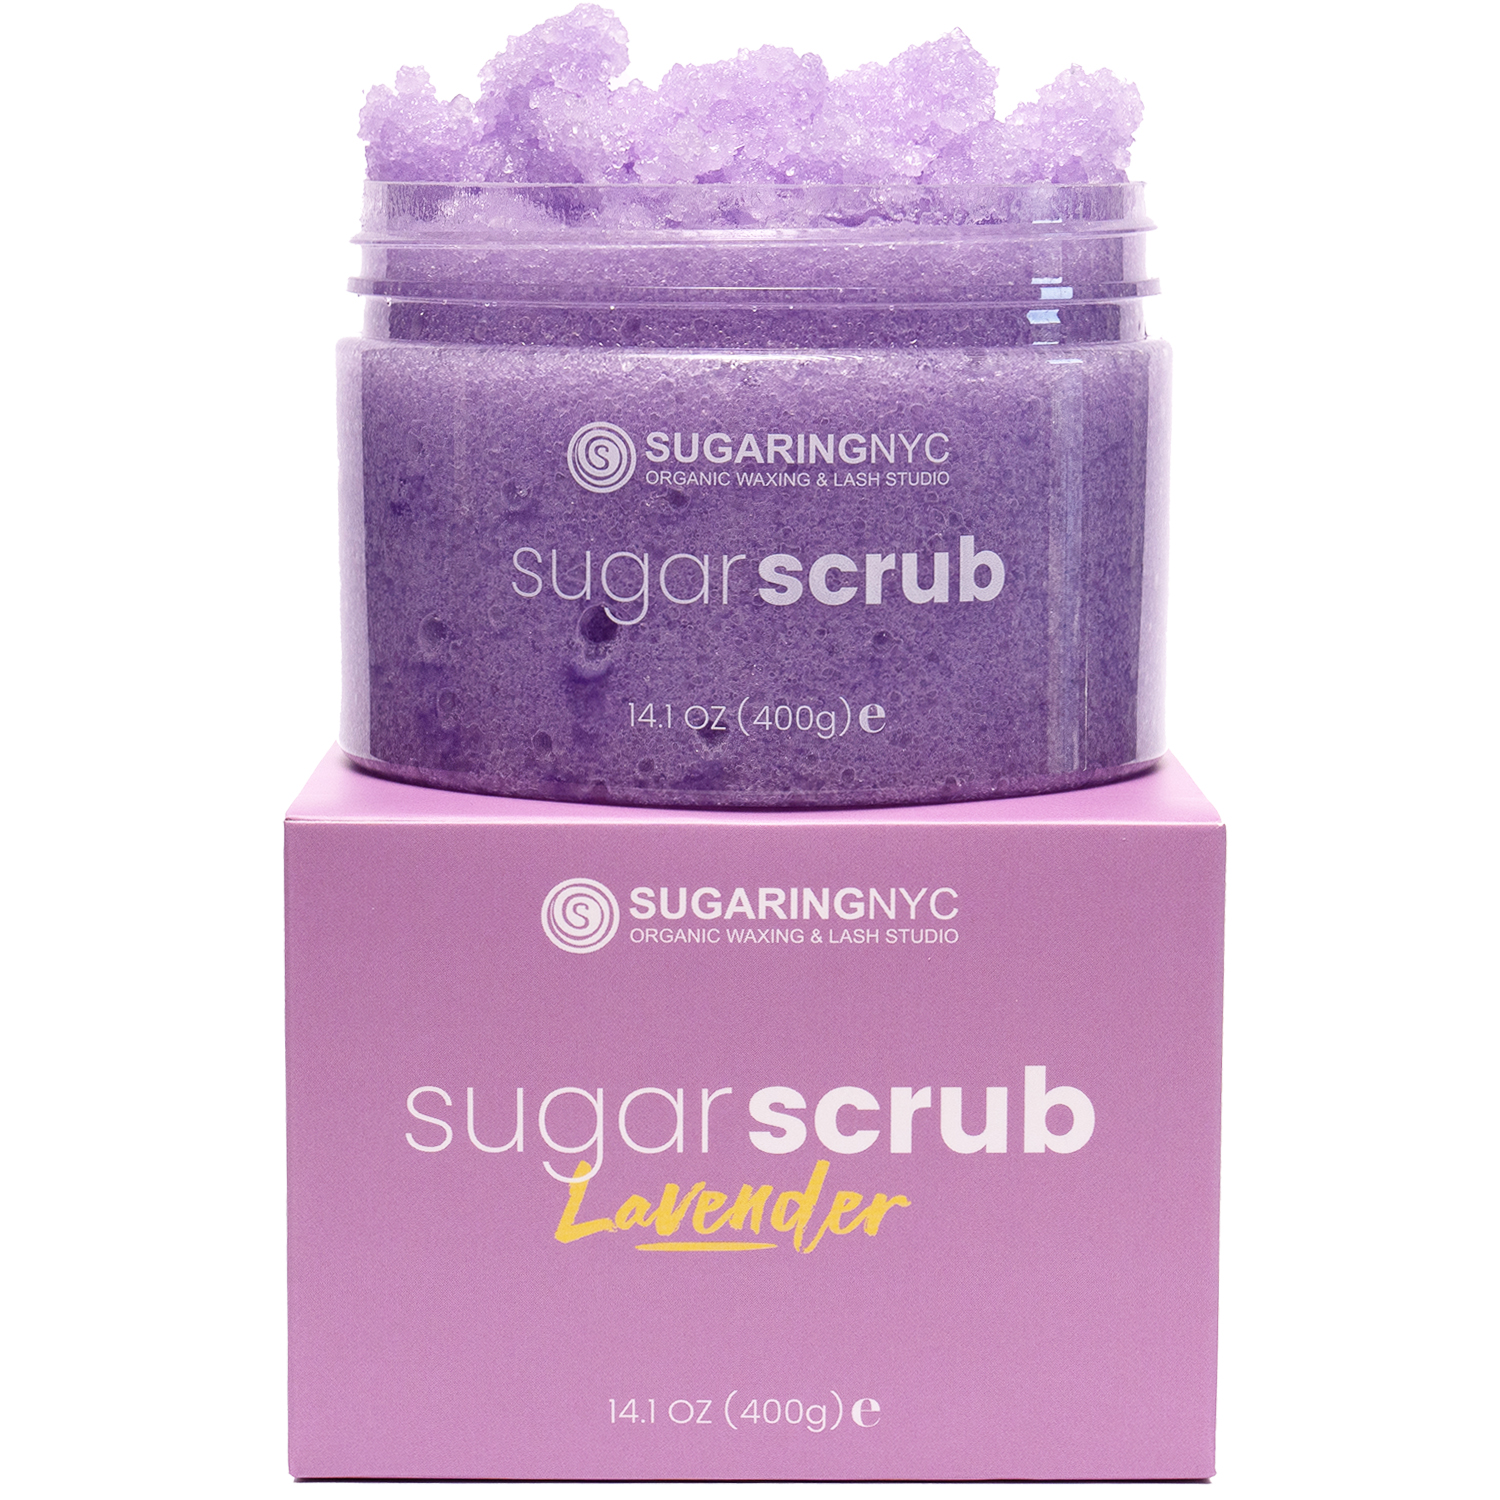 Sugaring NYC Signature Sugar Scrub – Lavender Field